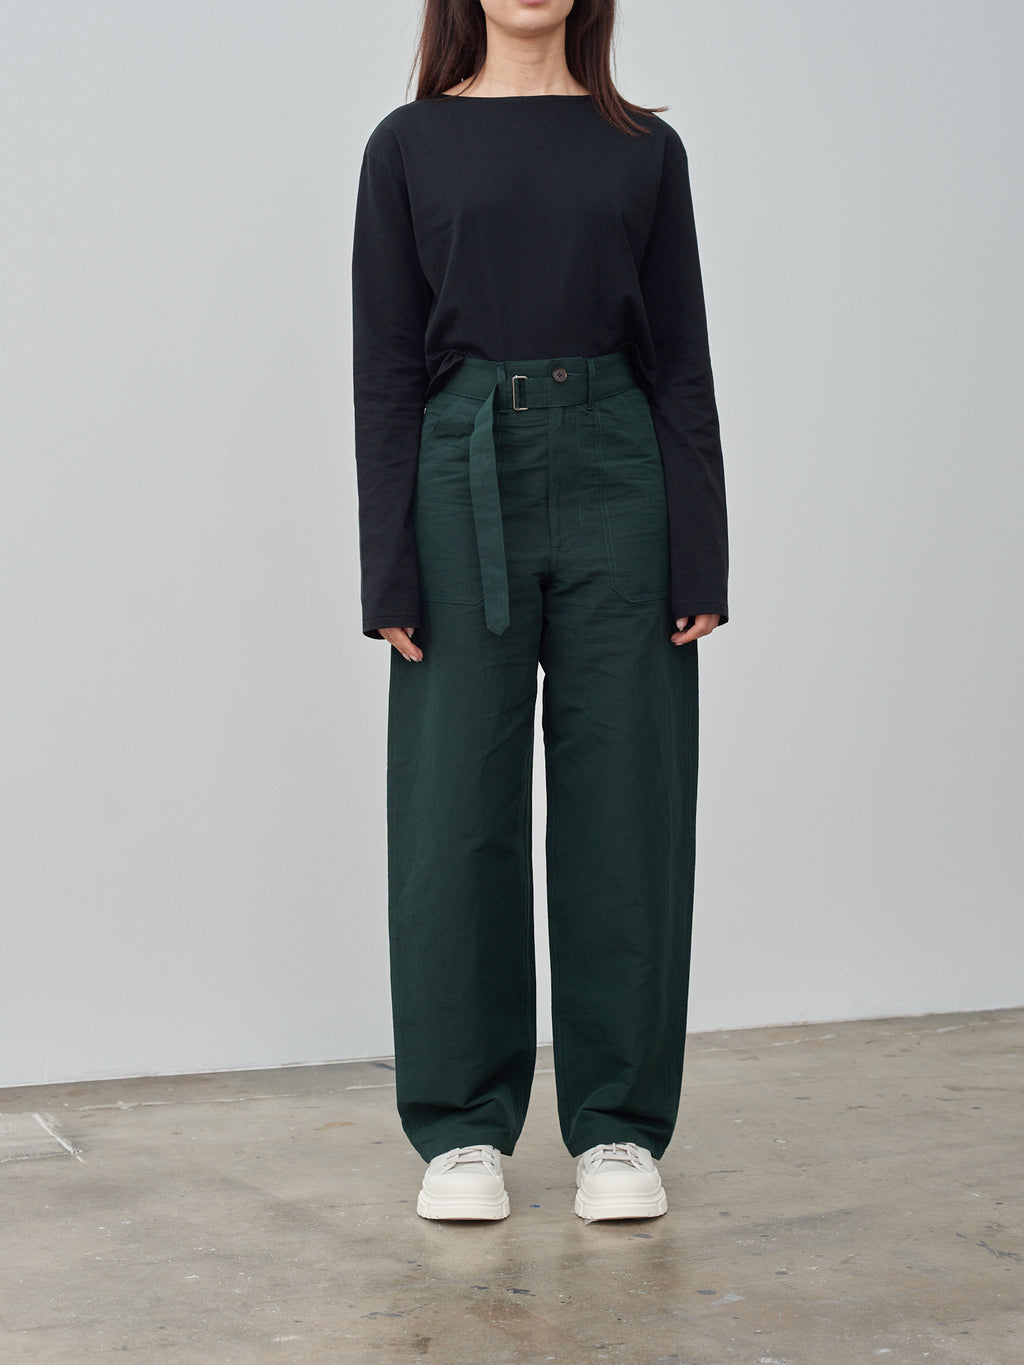 Namu Shop - Auralee High Density Finx Linen Weather Pants - Dark Green